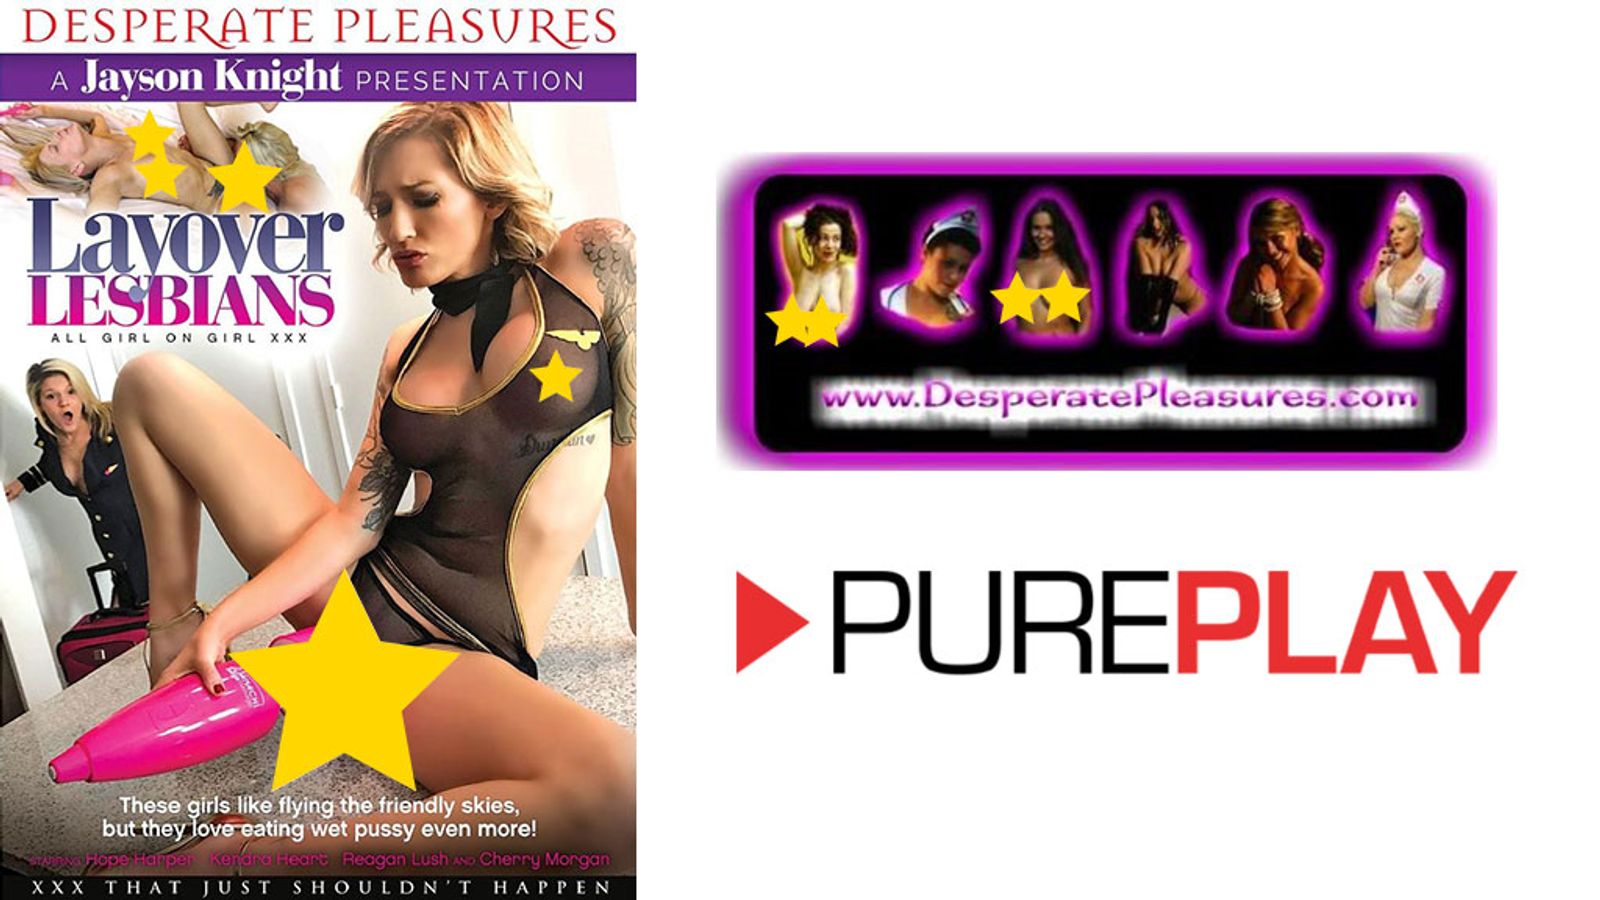 Hope Harper Stars In Desperate Pleasures' 'Layover Lesbians'